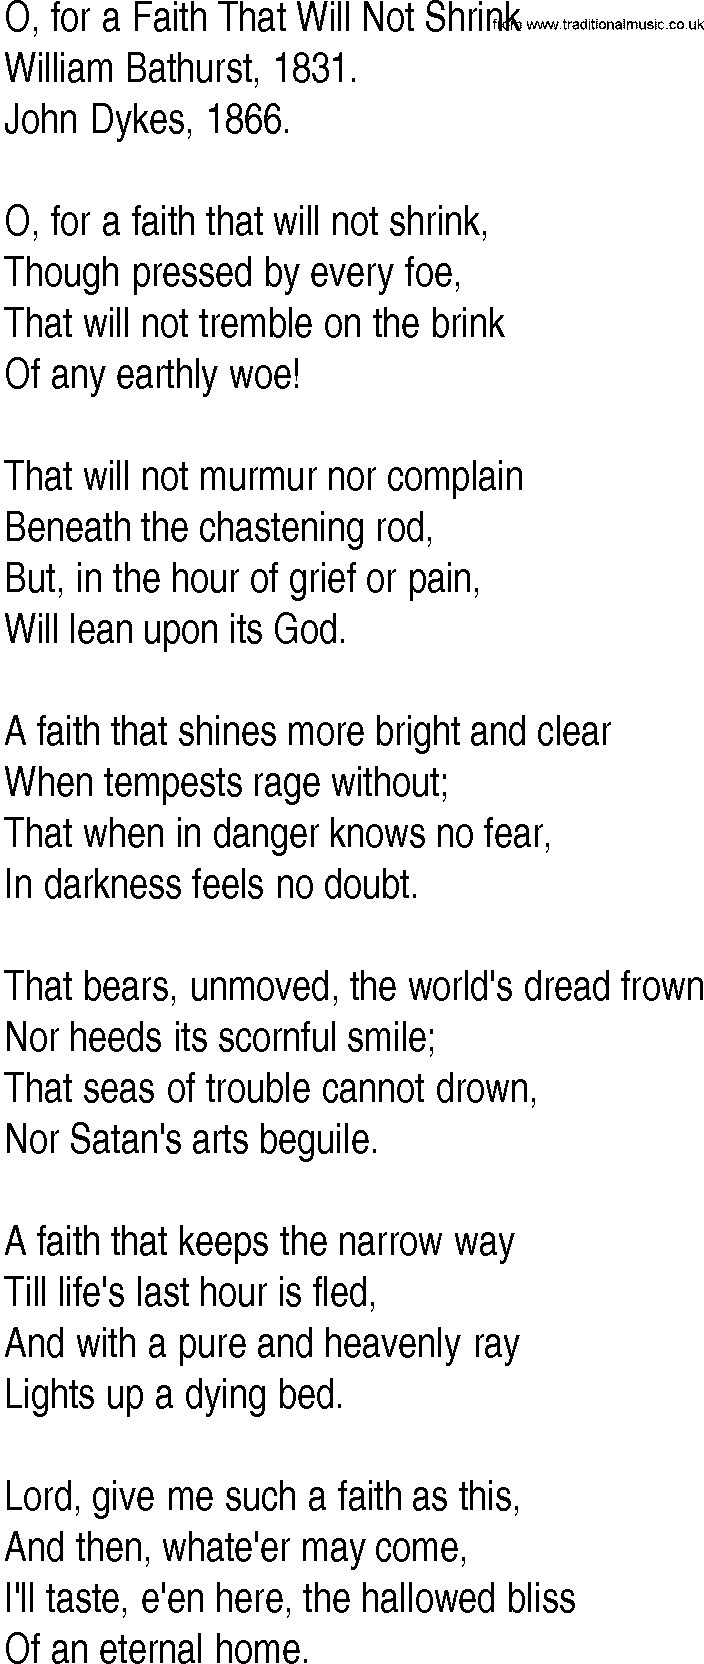 Hymn and Gospel Song: O, for a Faith That Will Not Shrink by William Bathurst lyrics